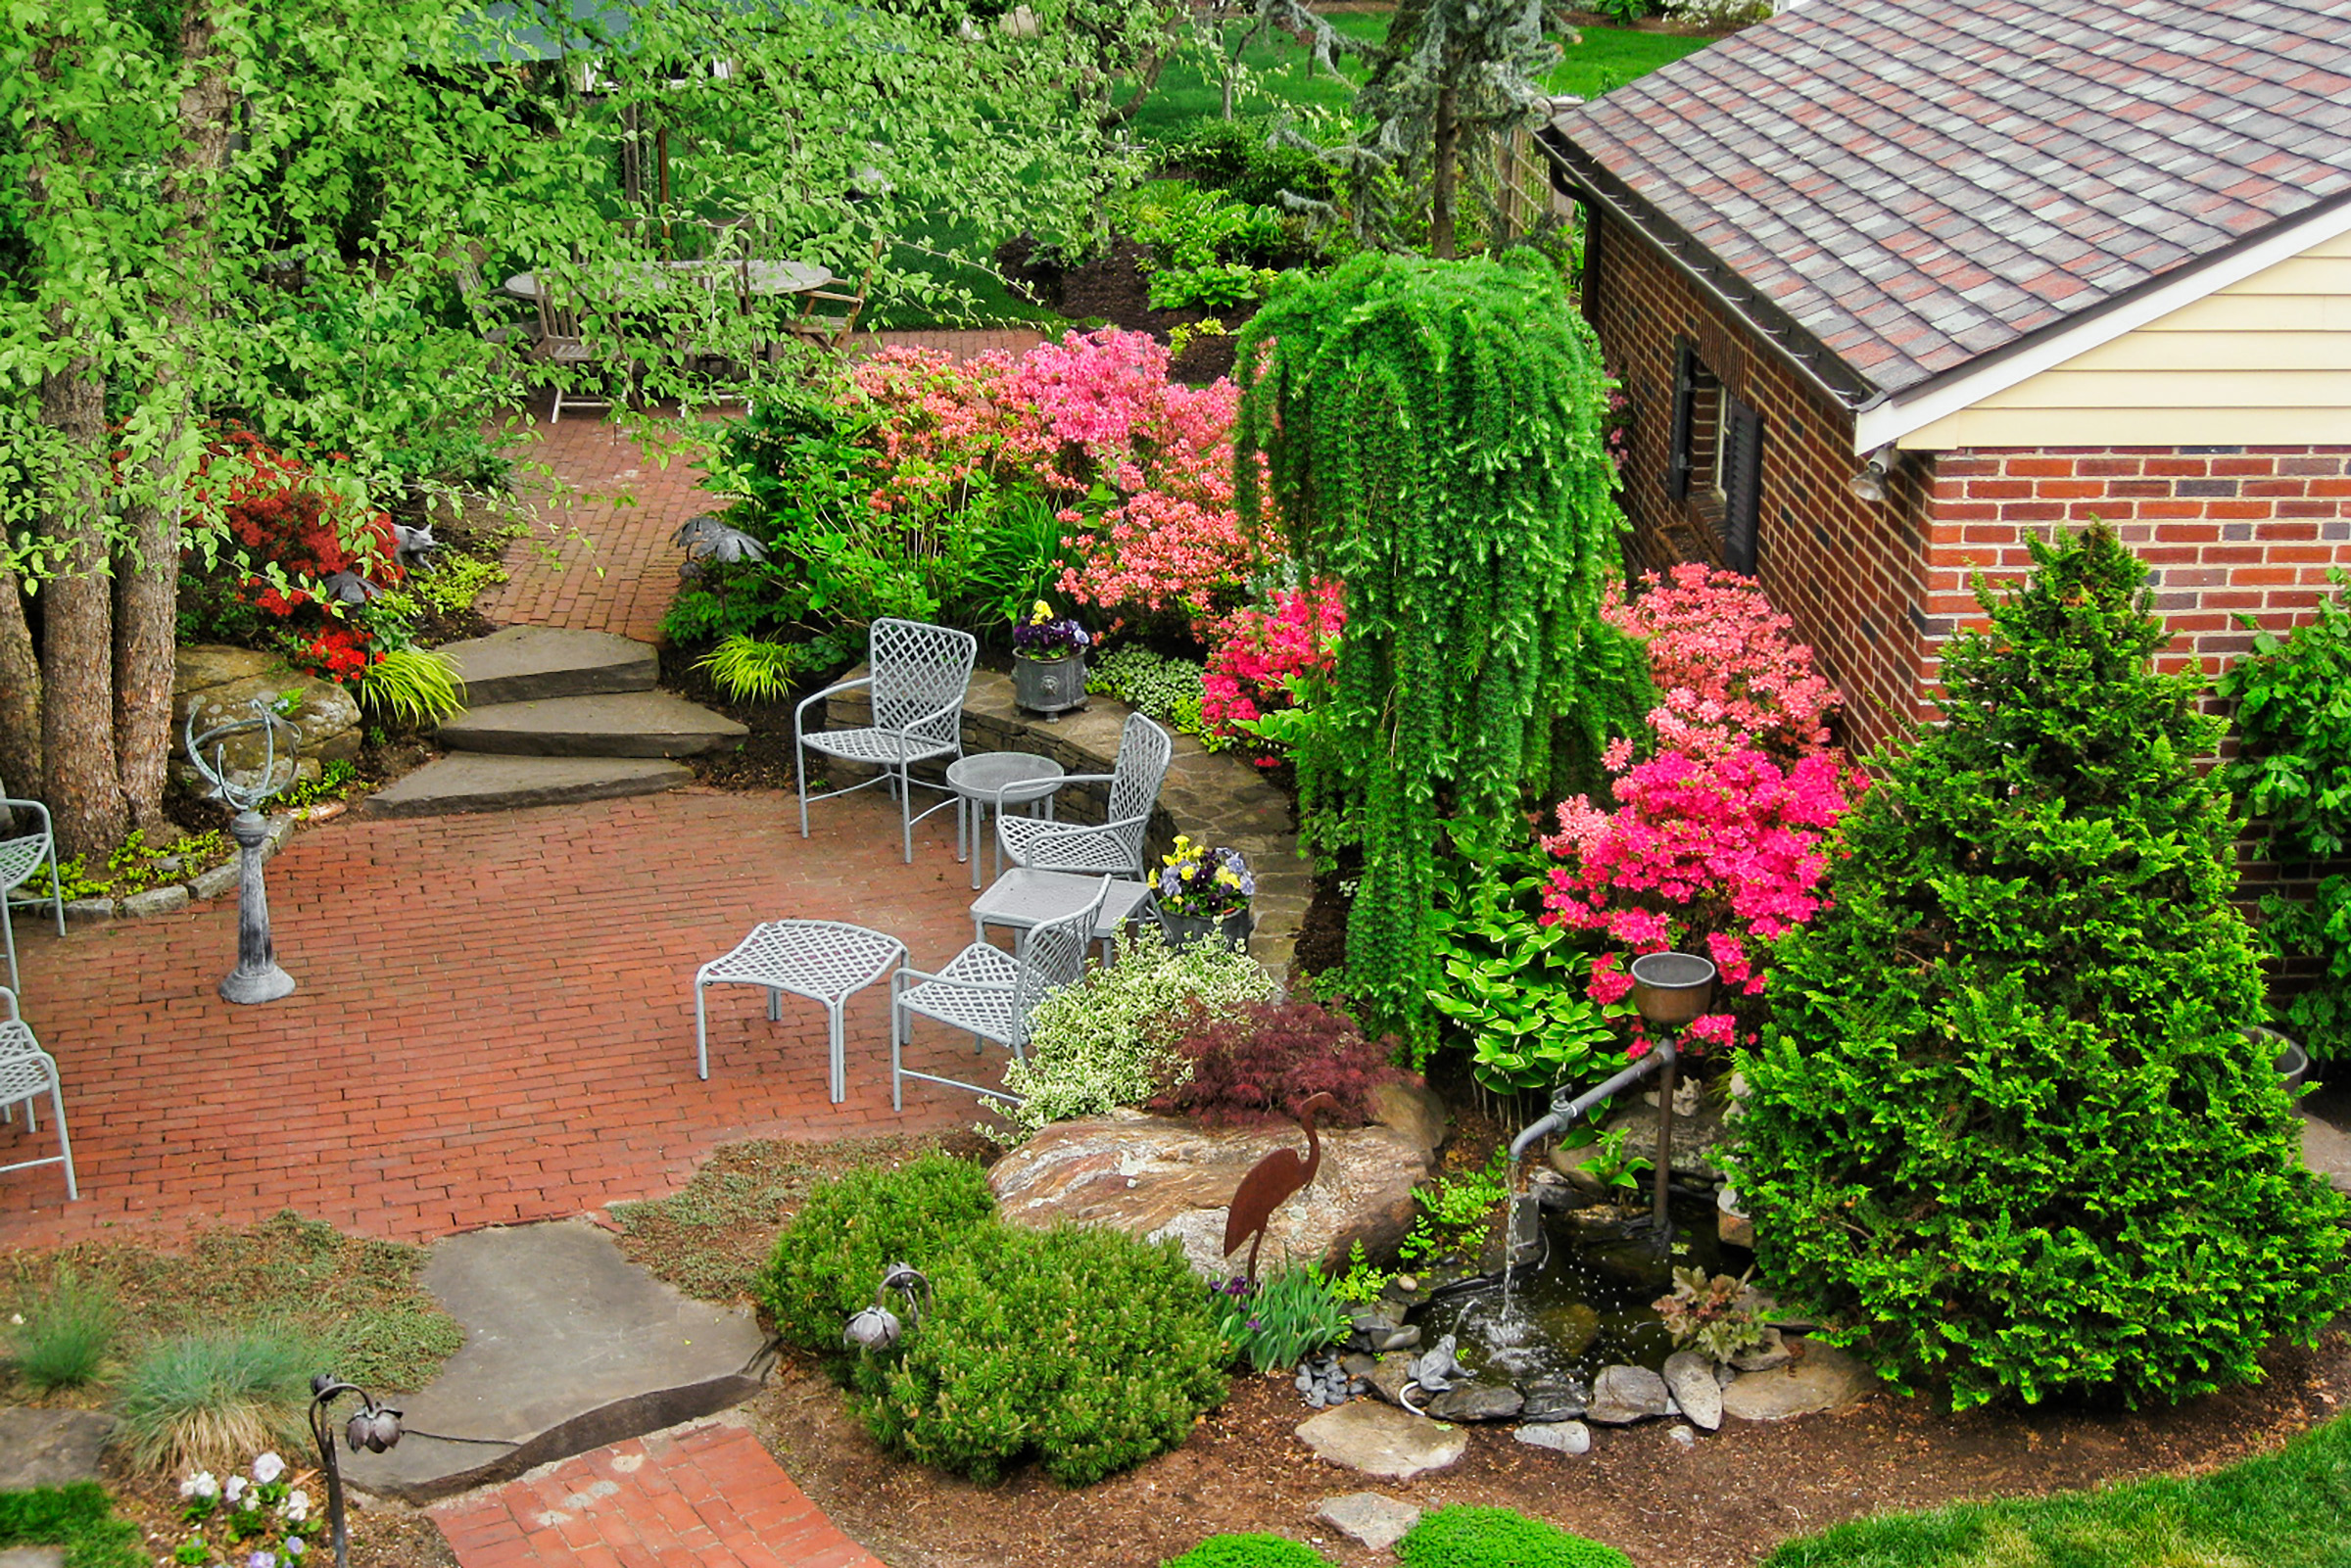 Garden seating in backyard